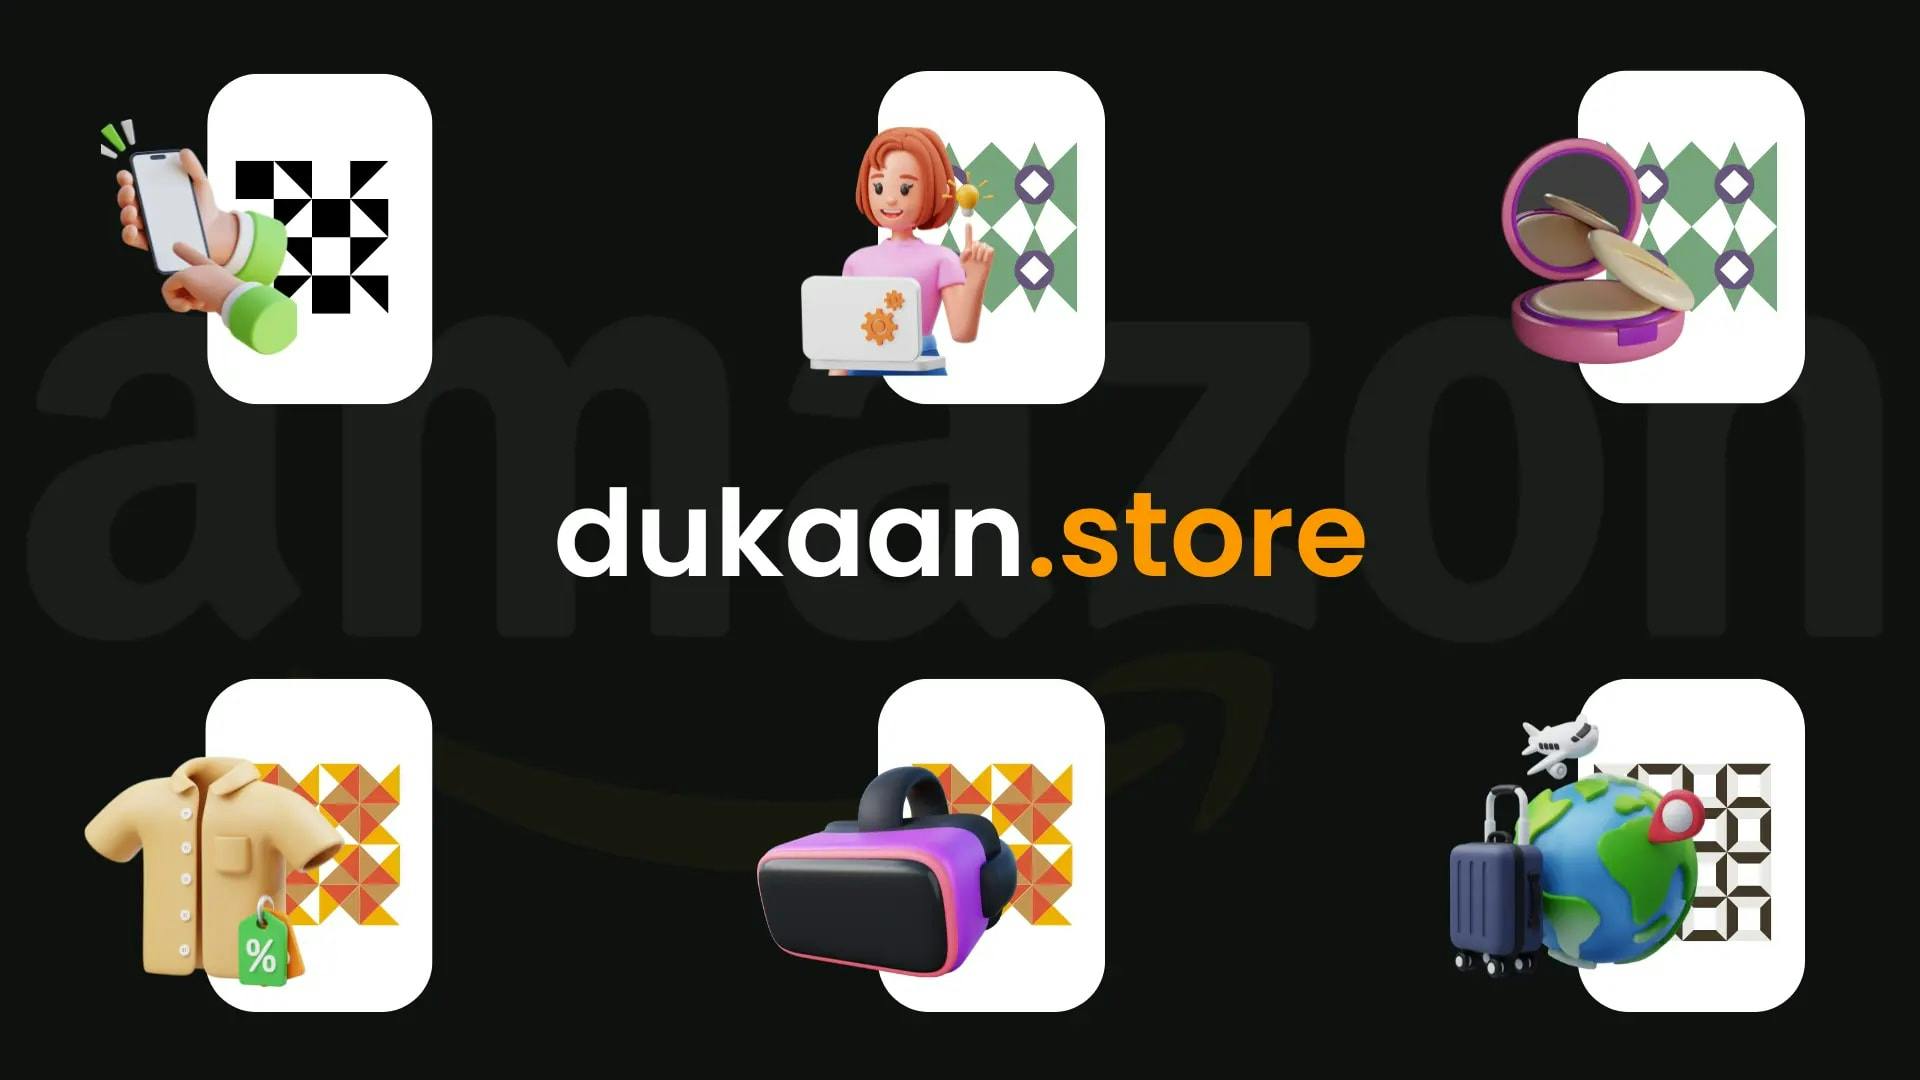 Dukaan.store | Sarthak S Kumar